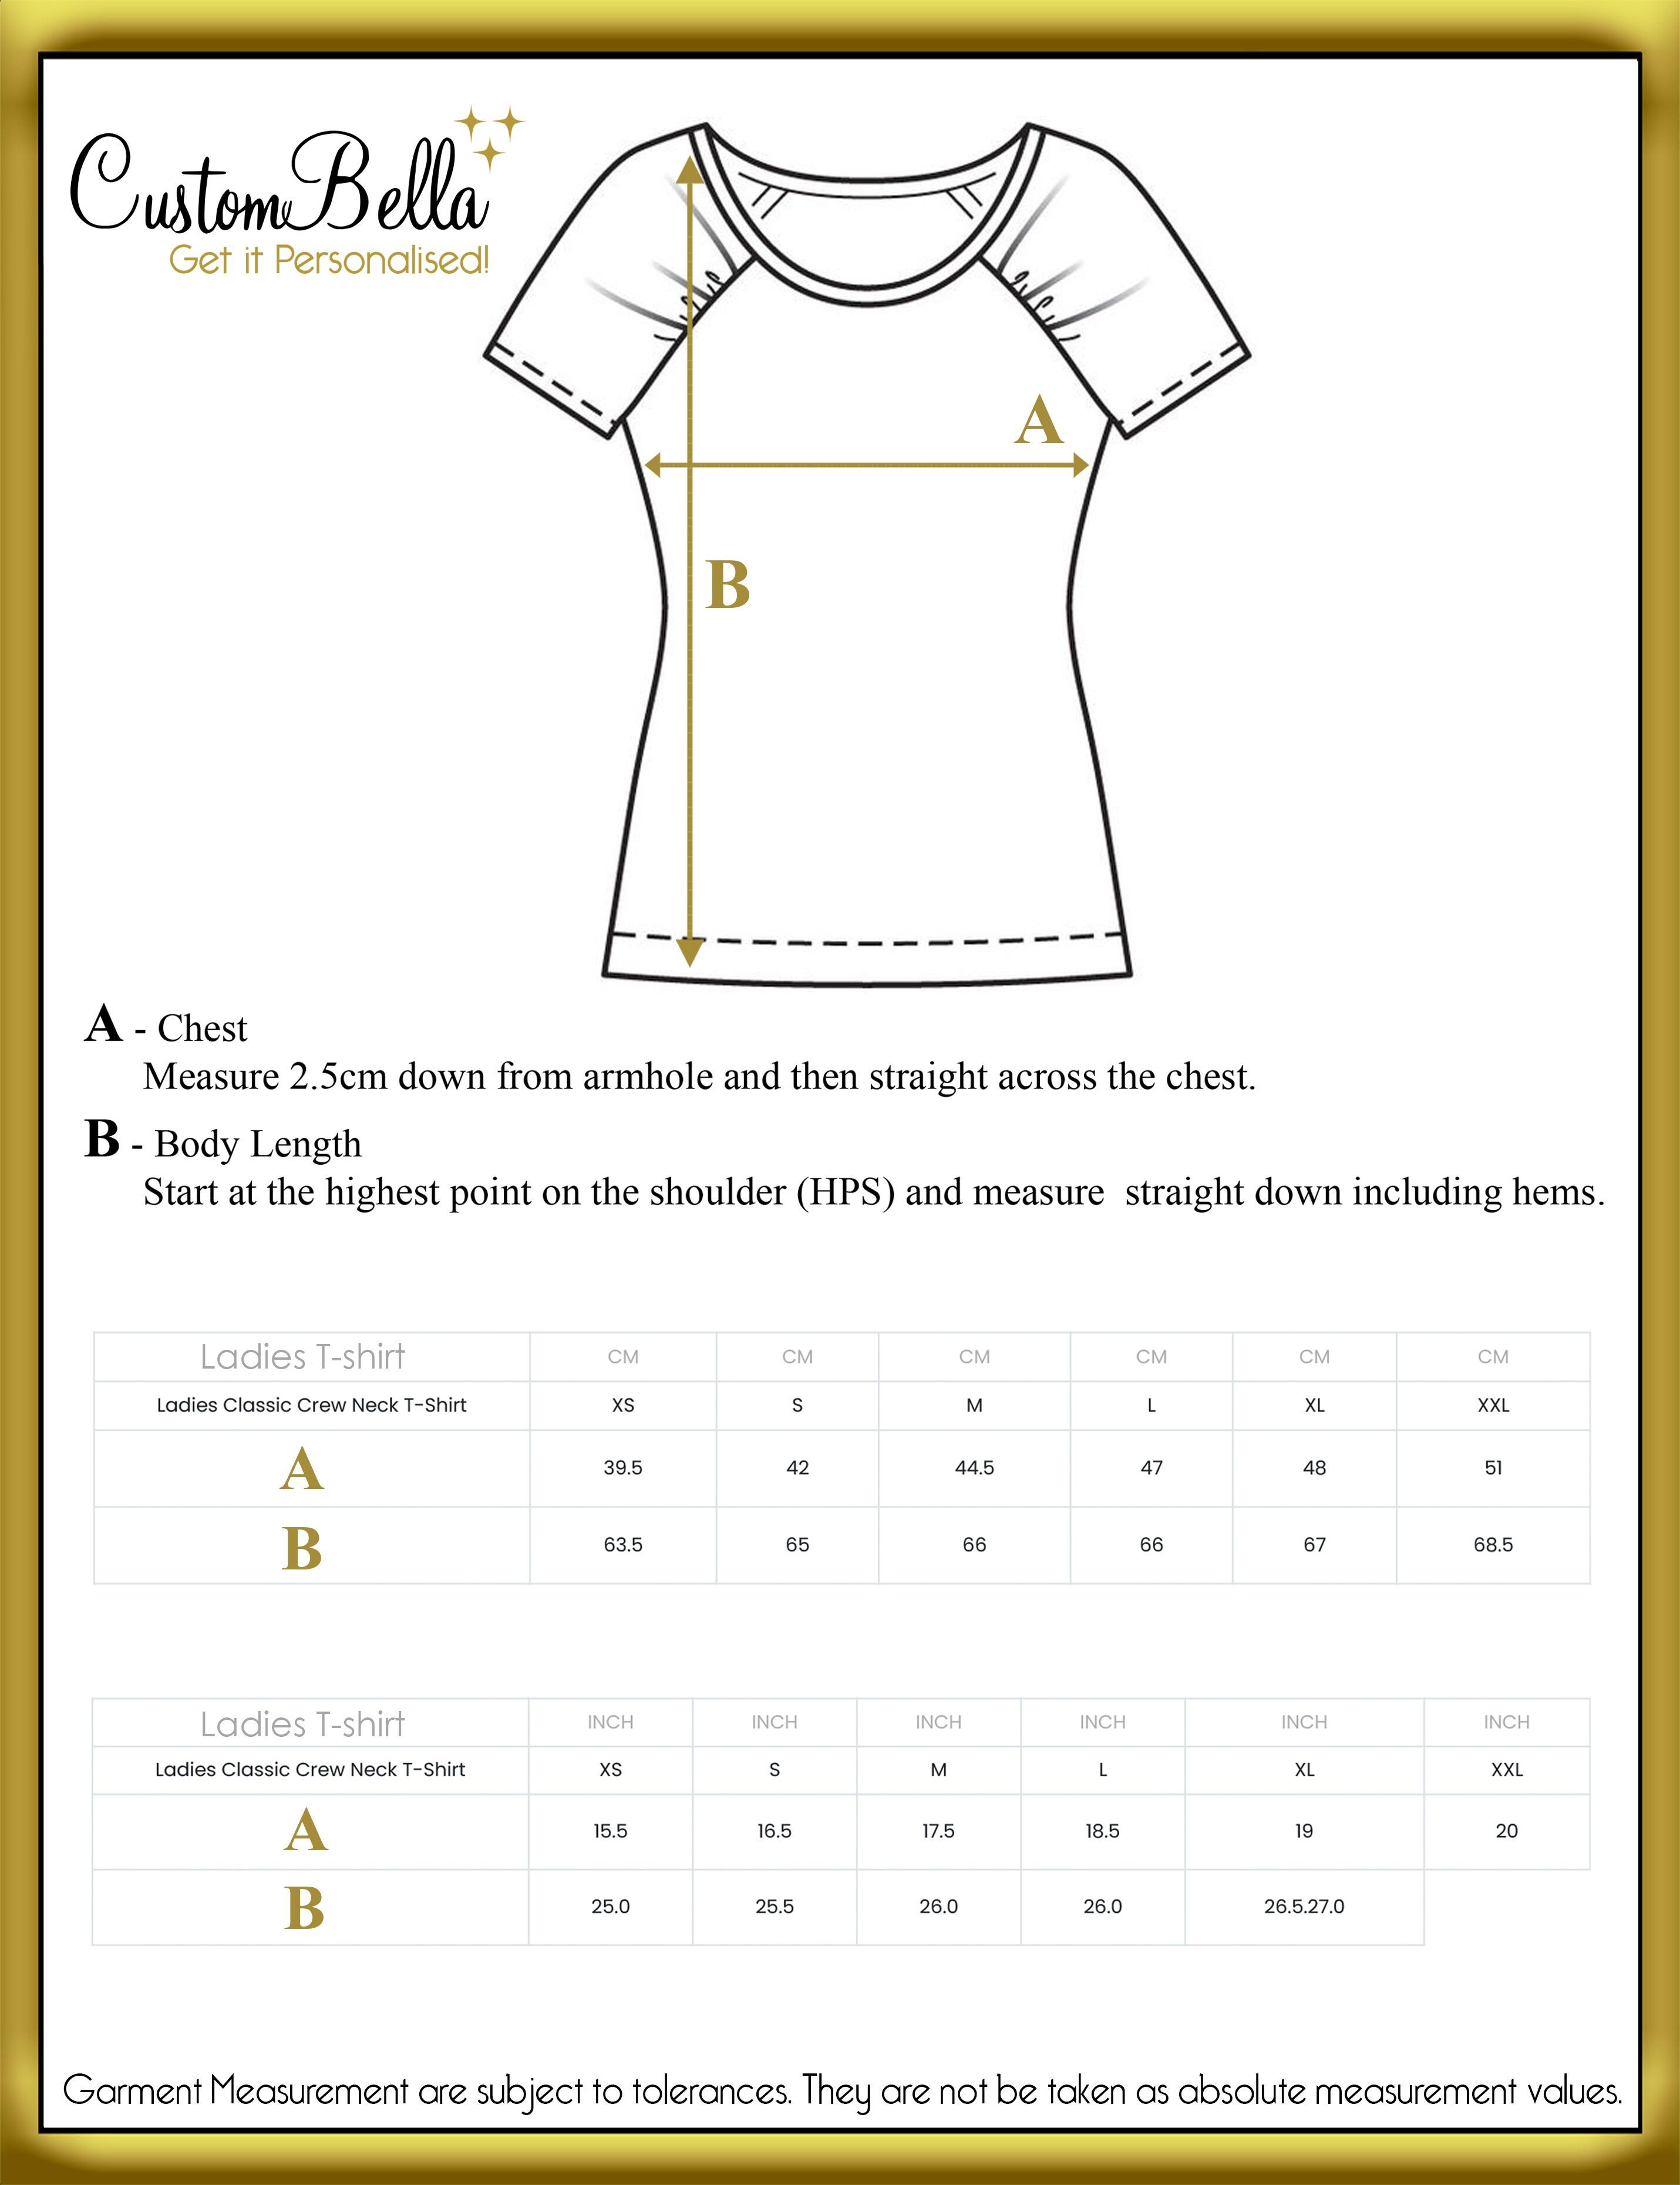 Golf photo printed women's t-shirt size chart